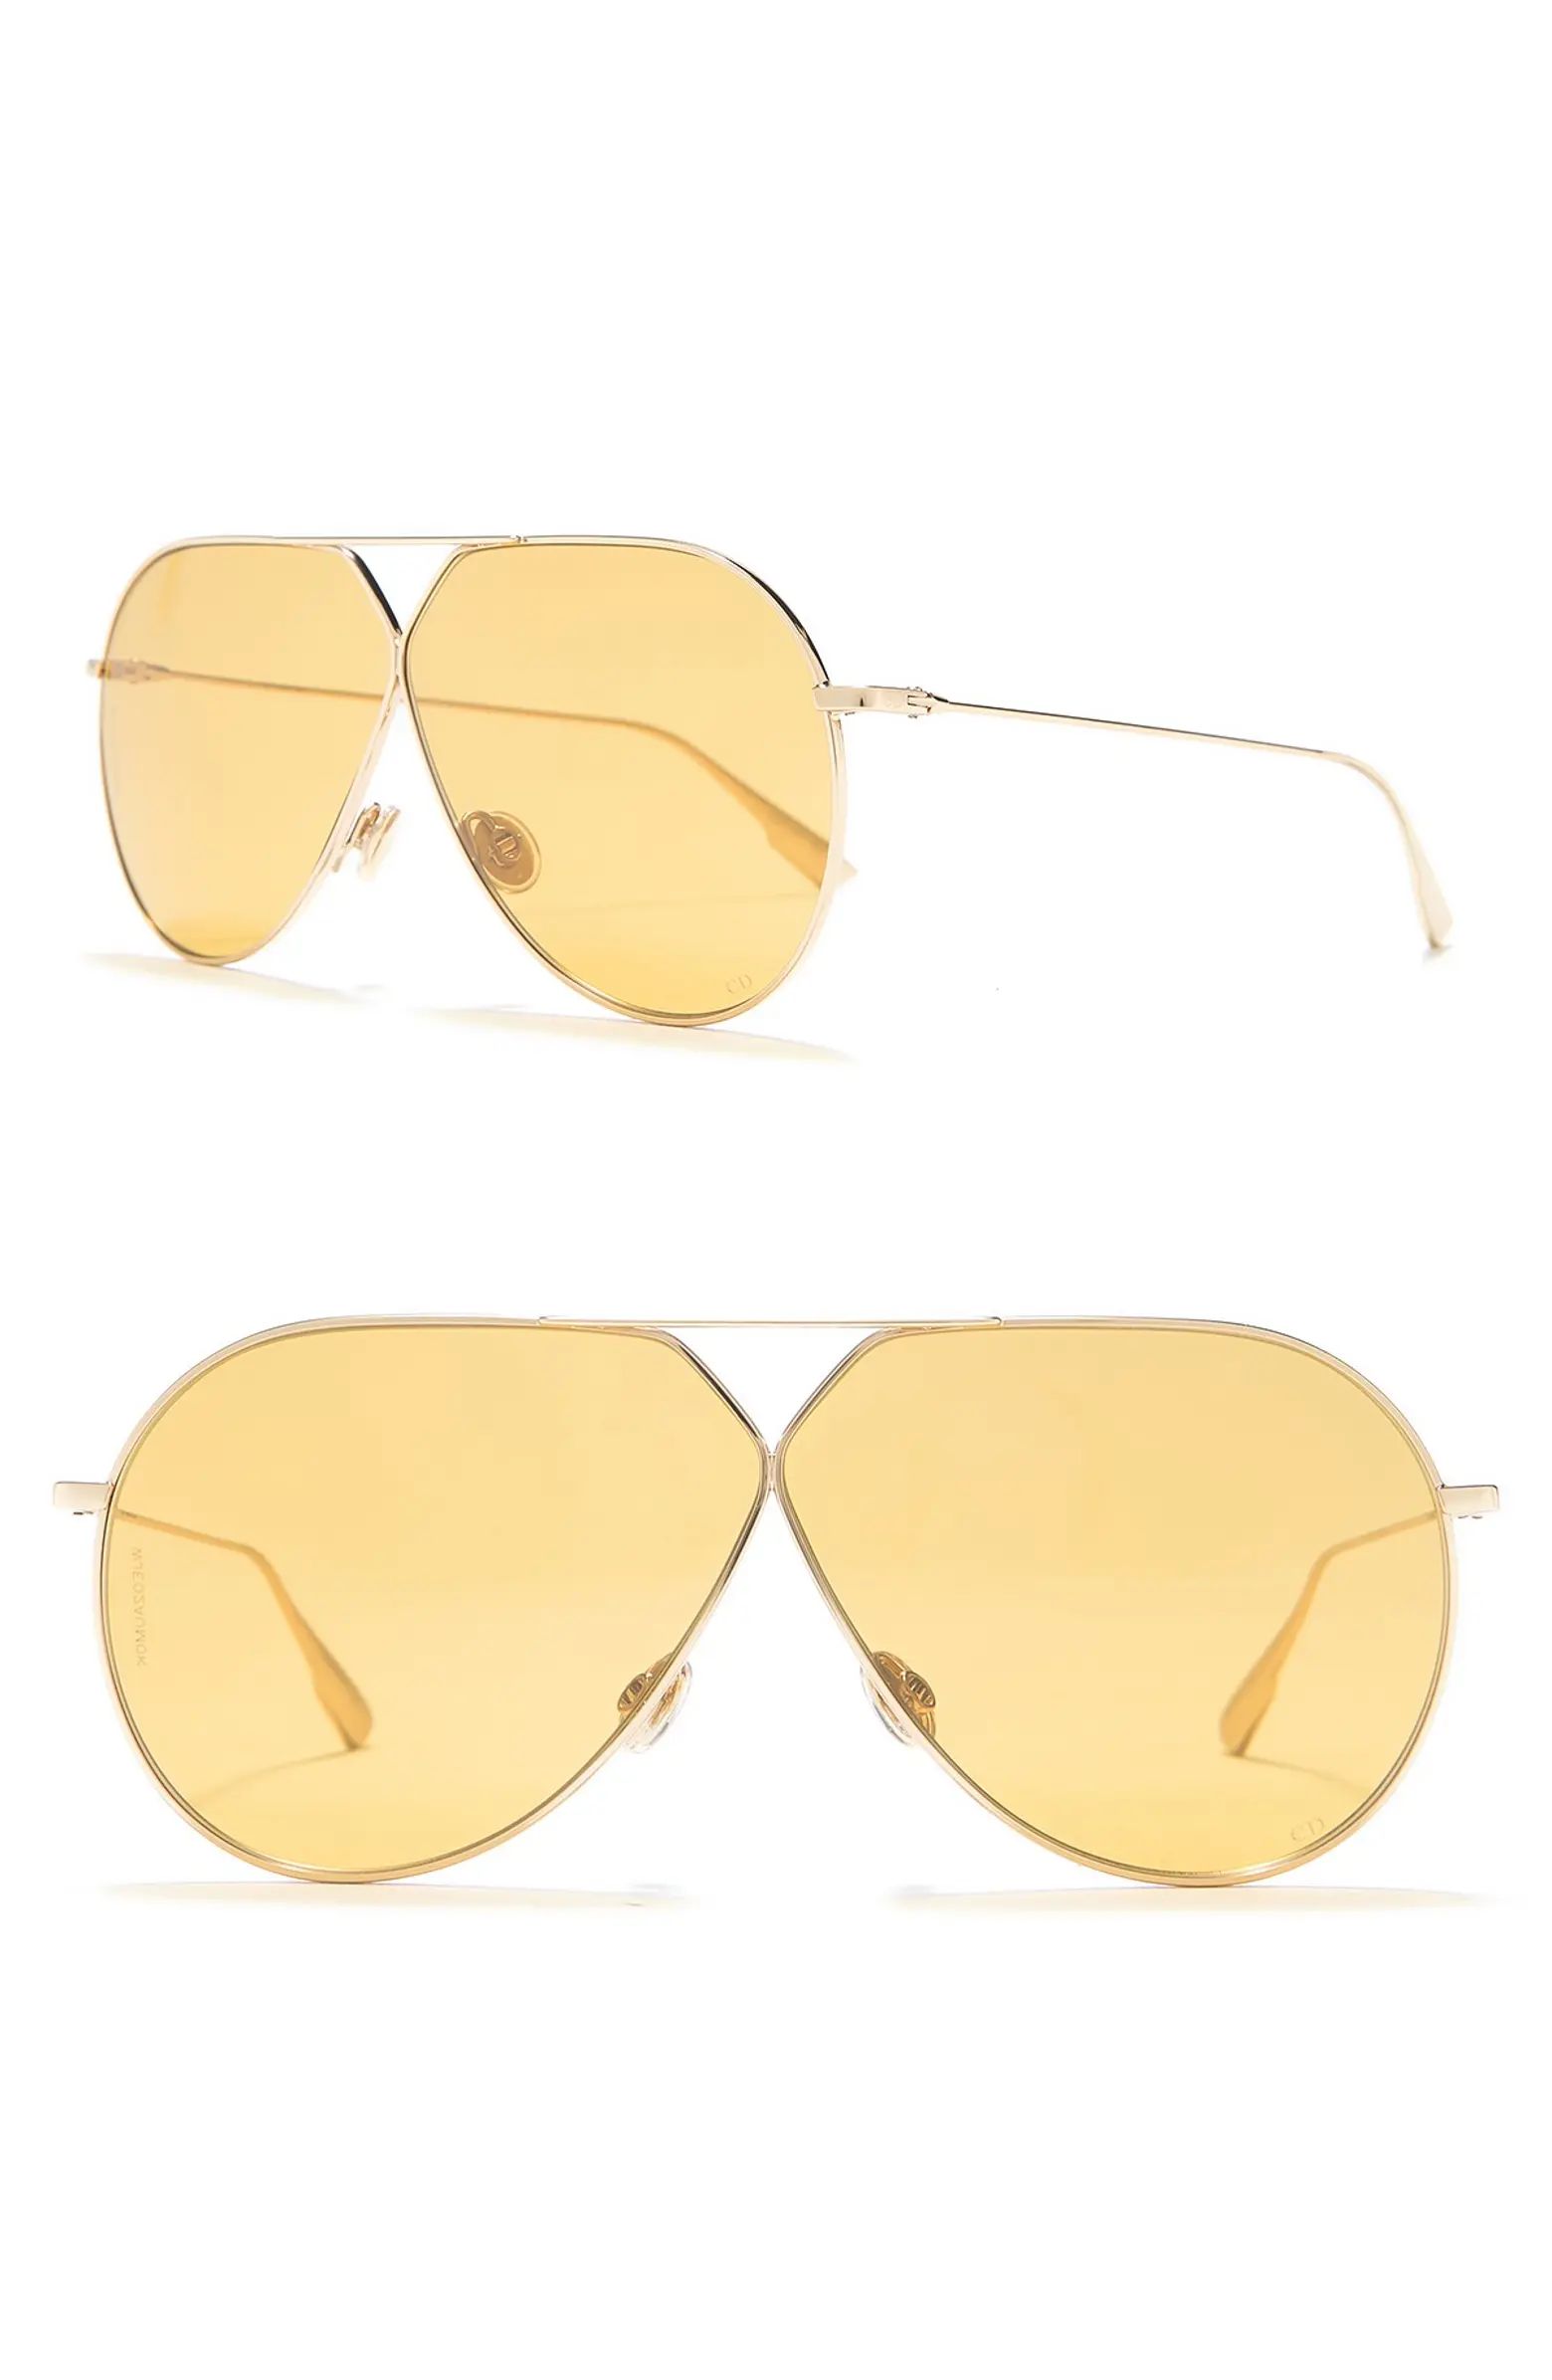 Christian Dior 65mm Aviator Sunglasses | Nordstrom Rack